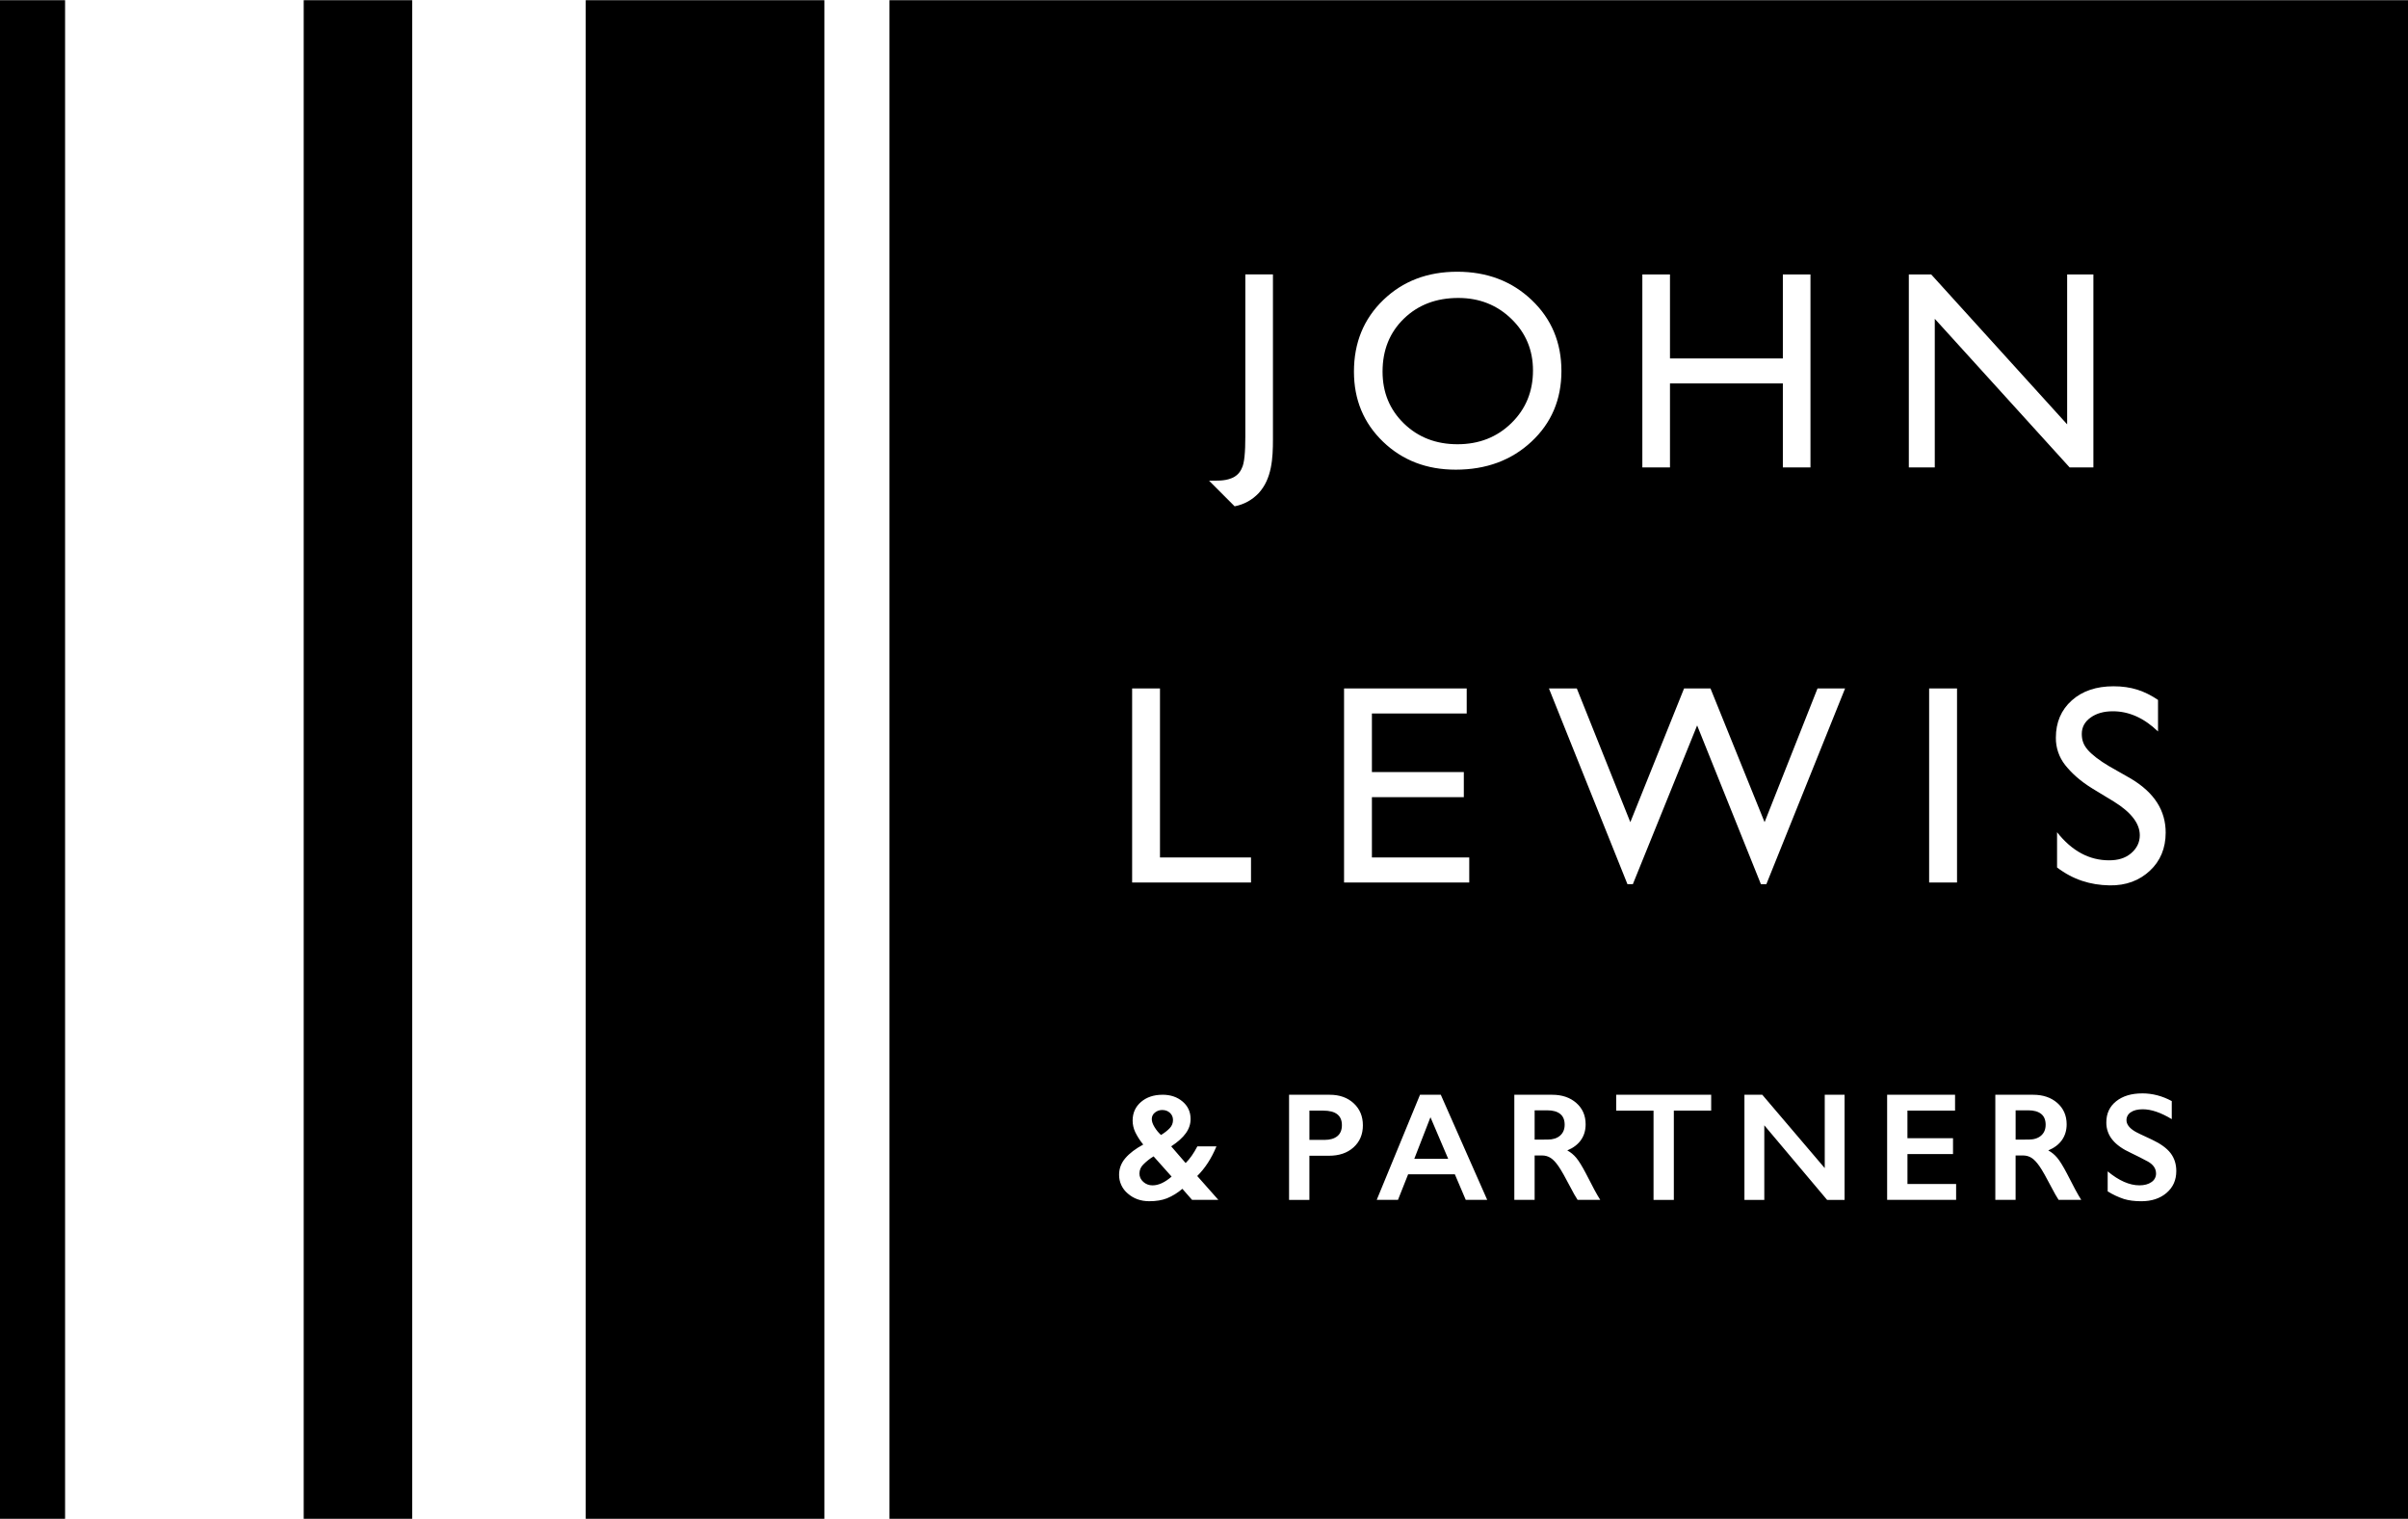 John lewis & and partners logo